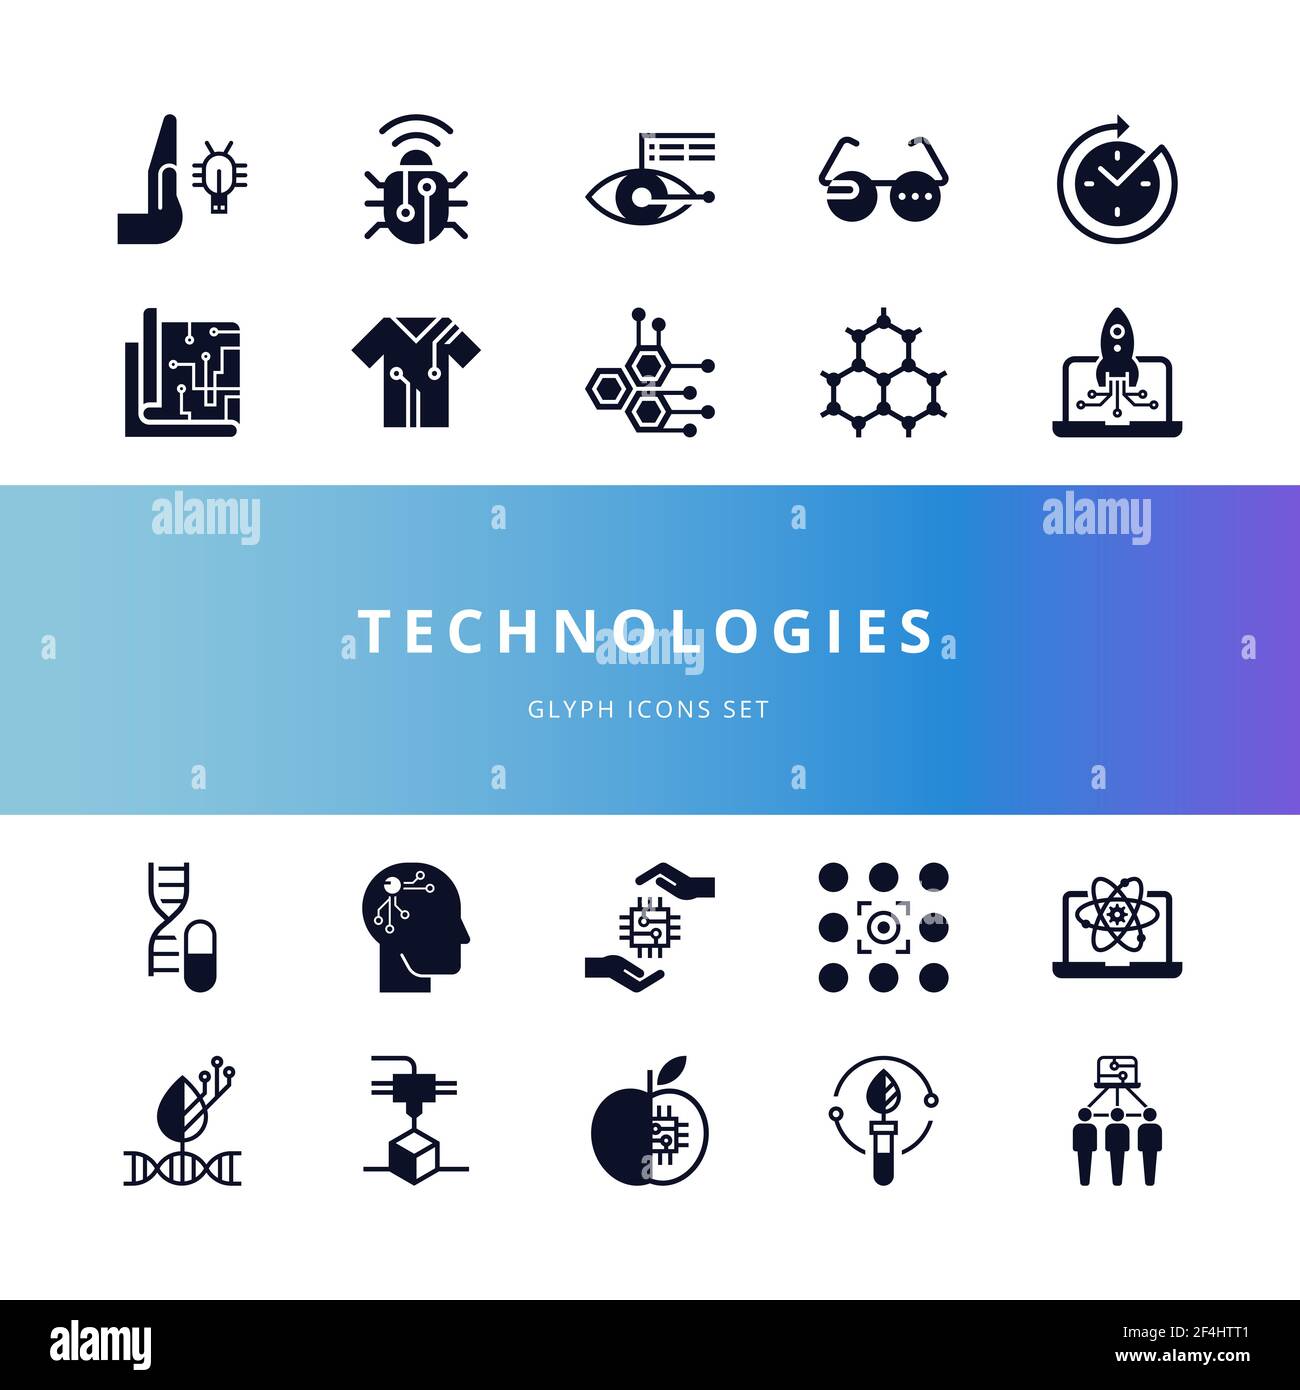 future technologies icons Stock Vector